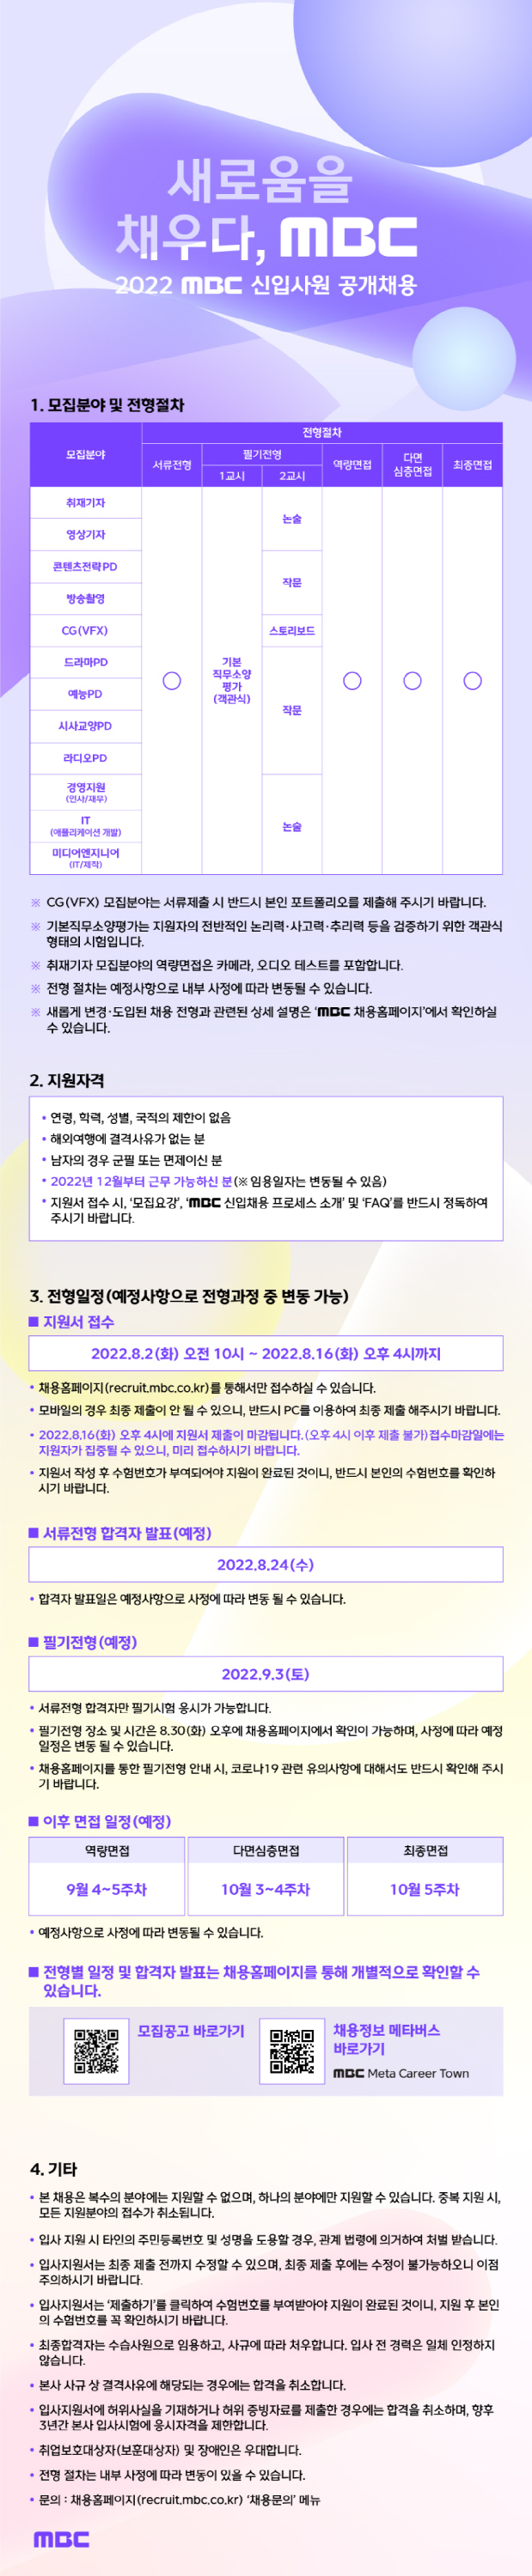 2022 MBC 신입사원 공개채용 공고 .jpg